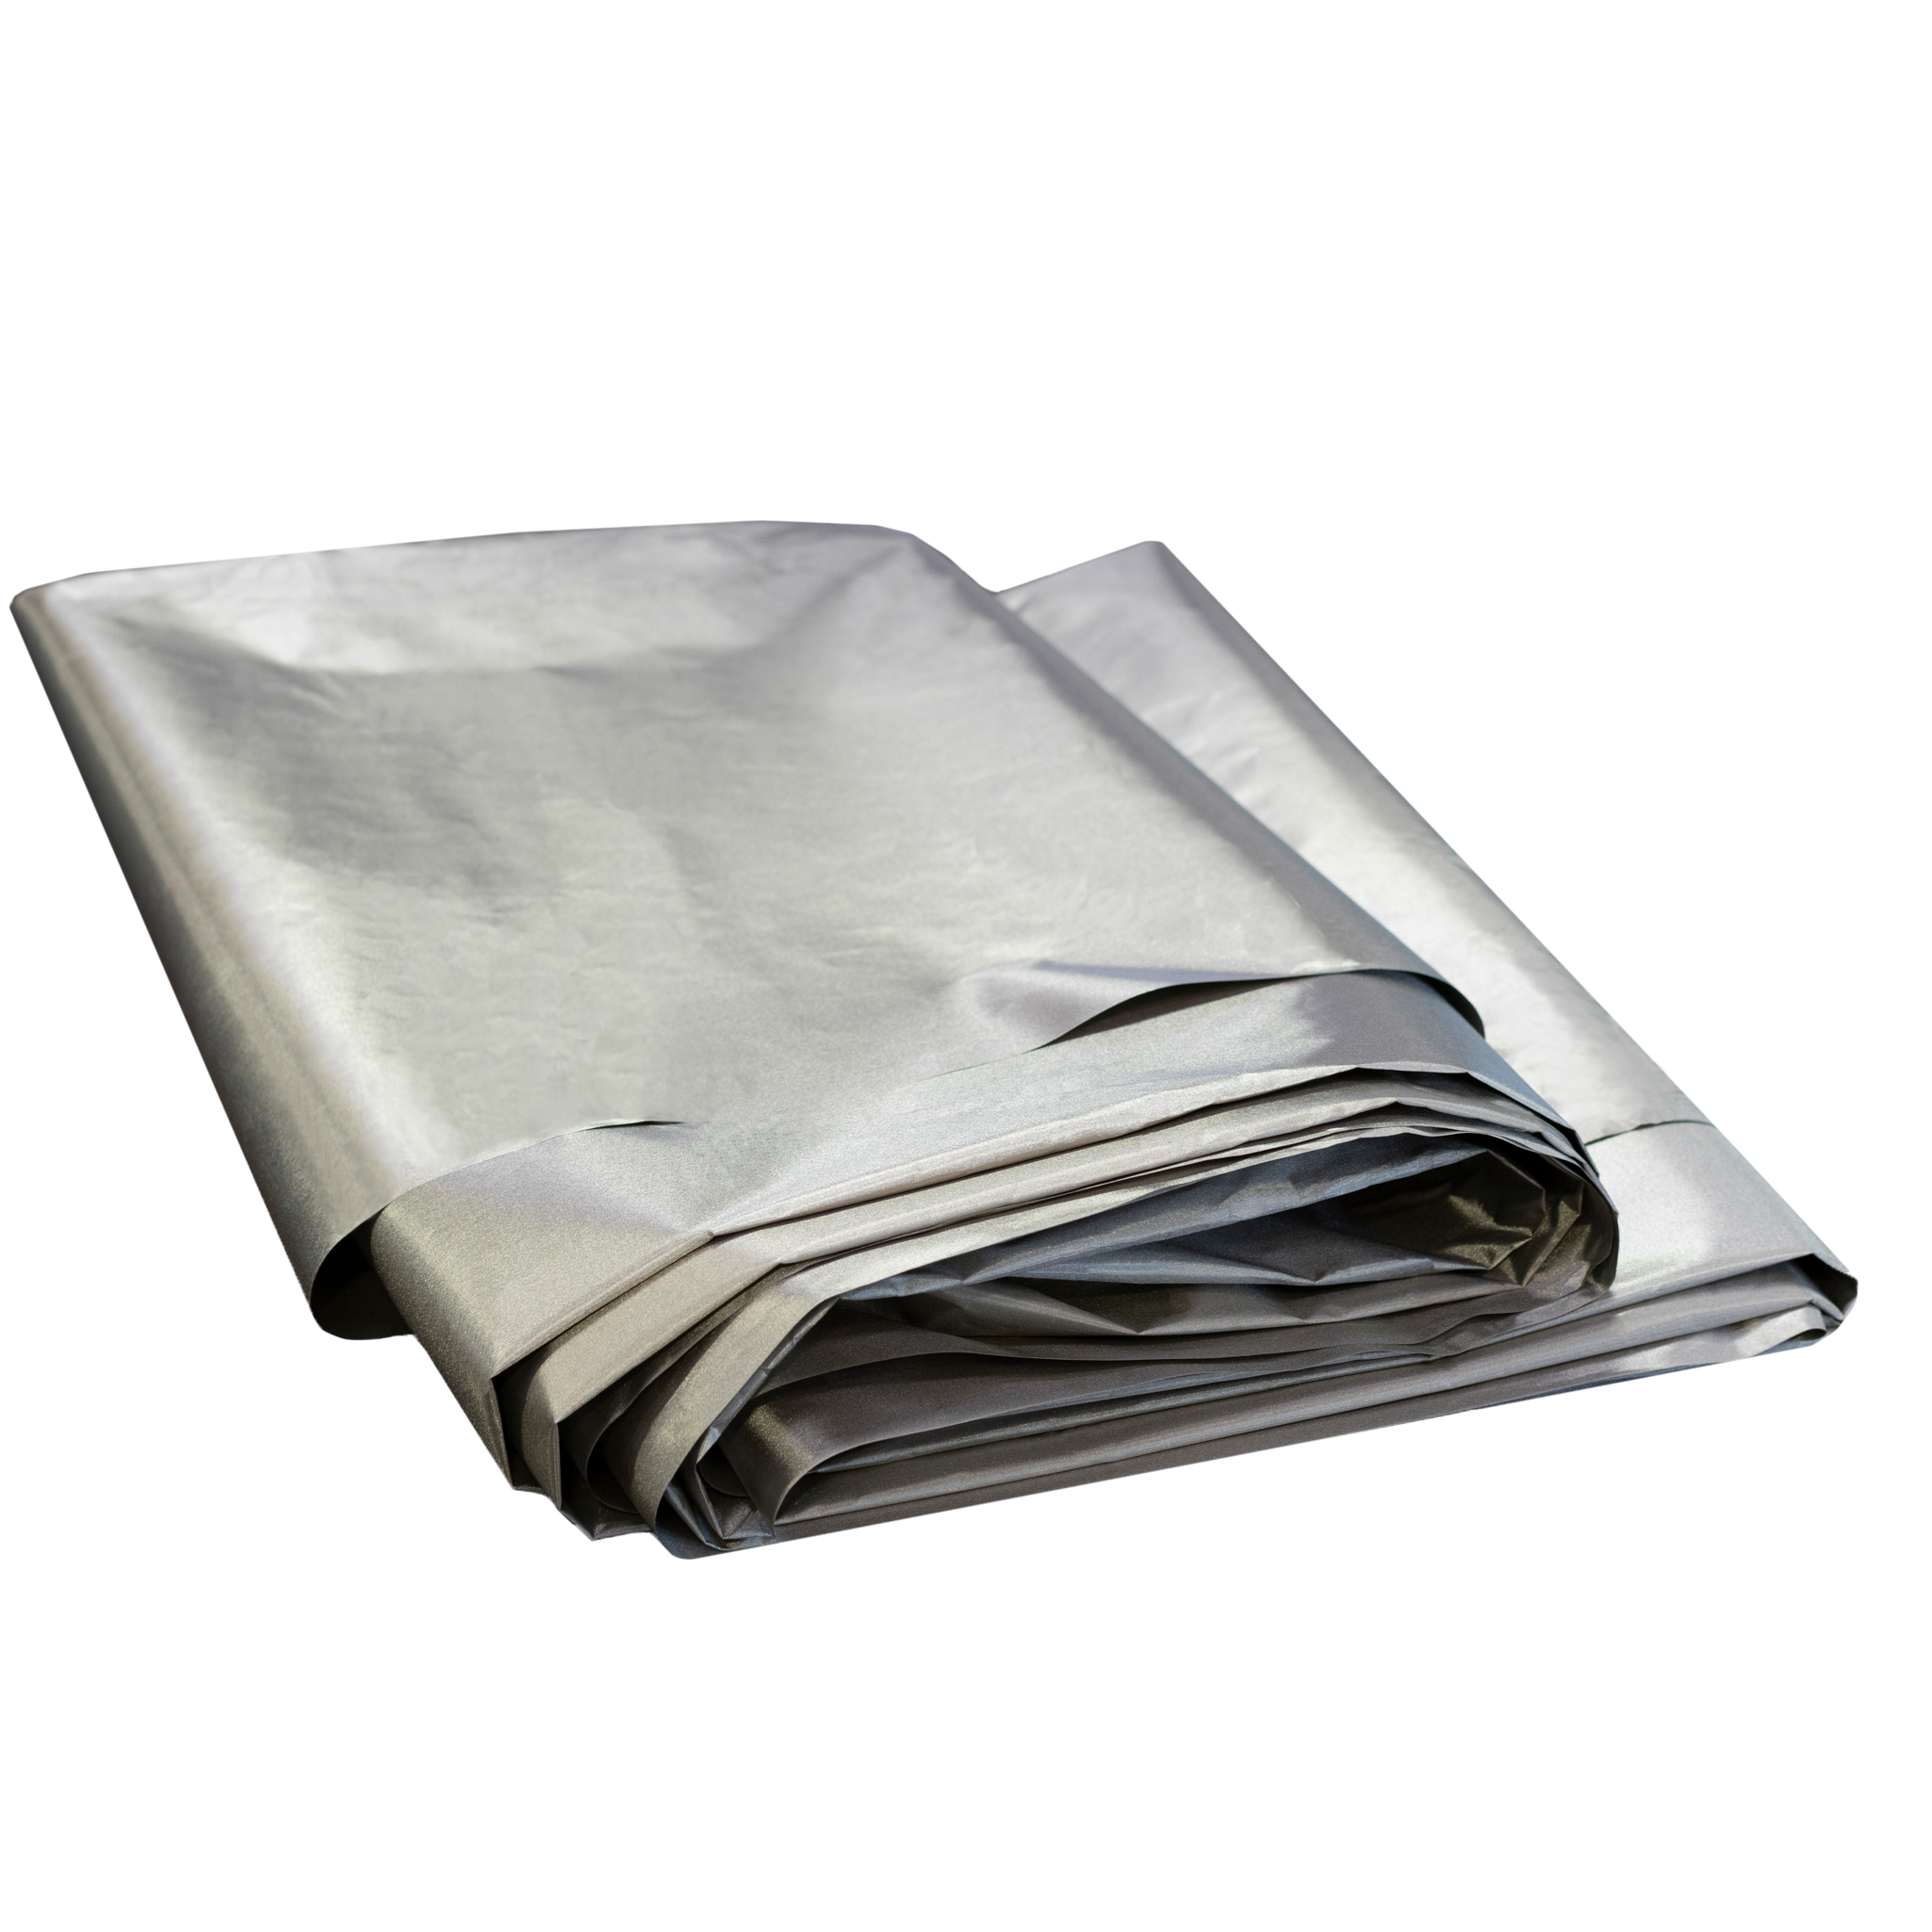 Aluminum Foil Sheet w/ Conductive Adhesive Approx 12 x 10 - Qty 5